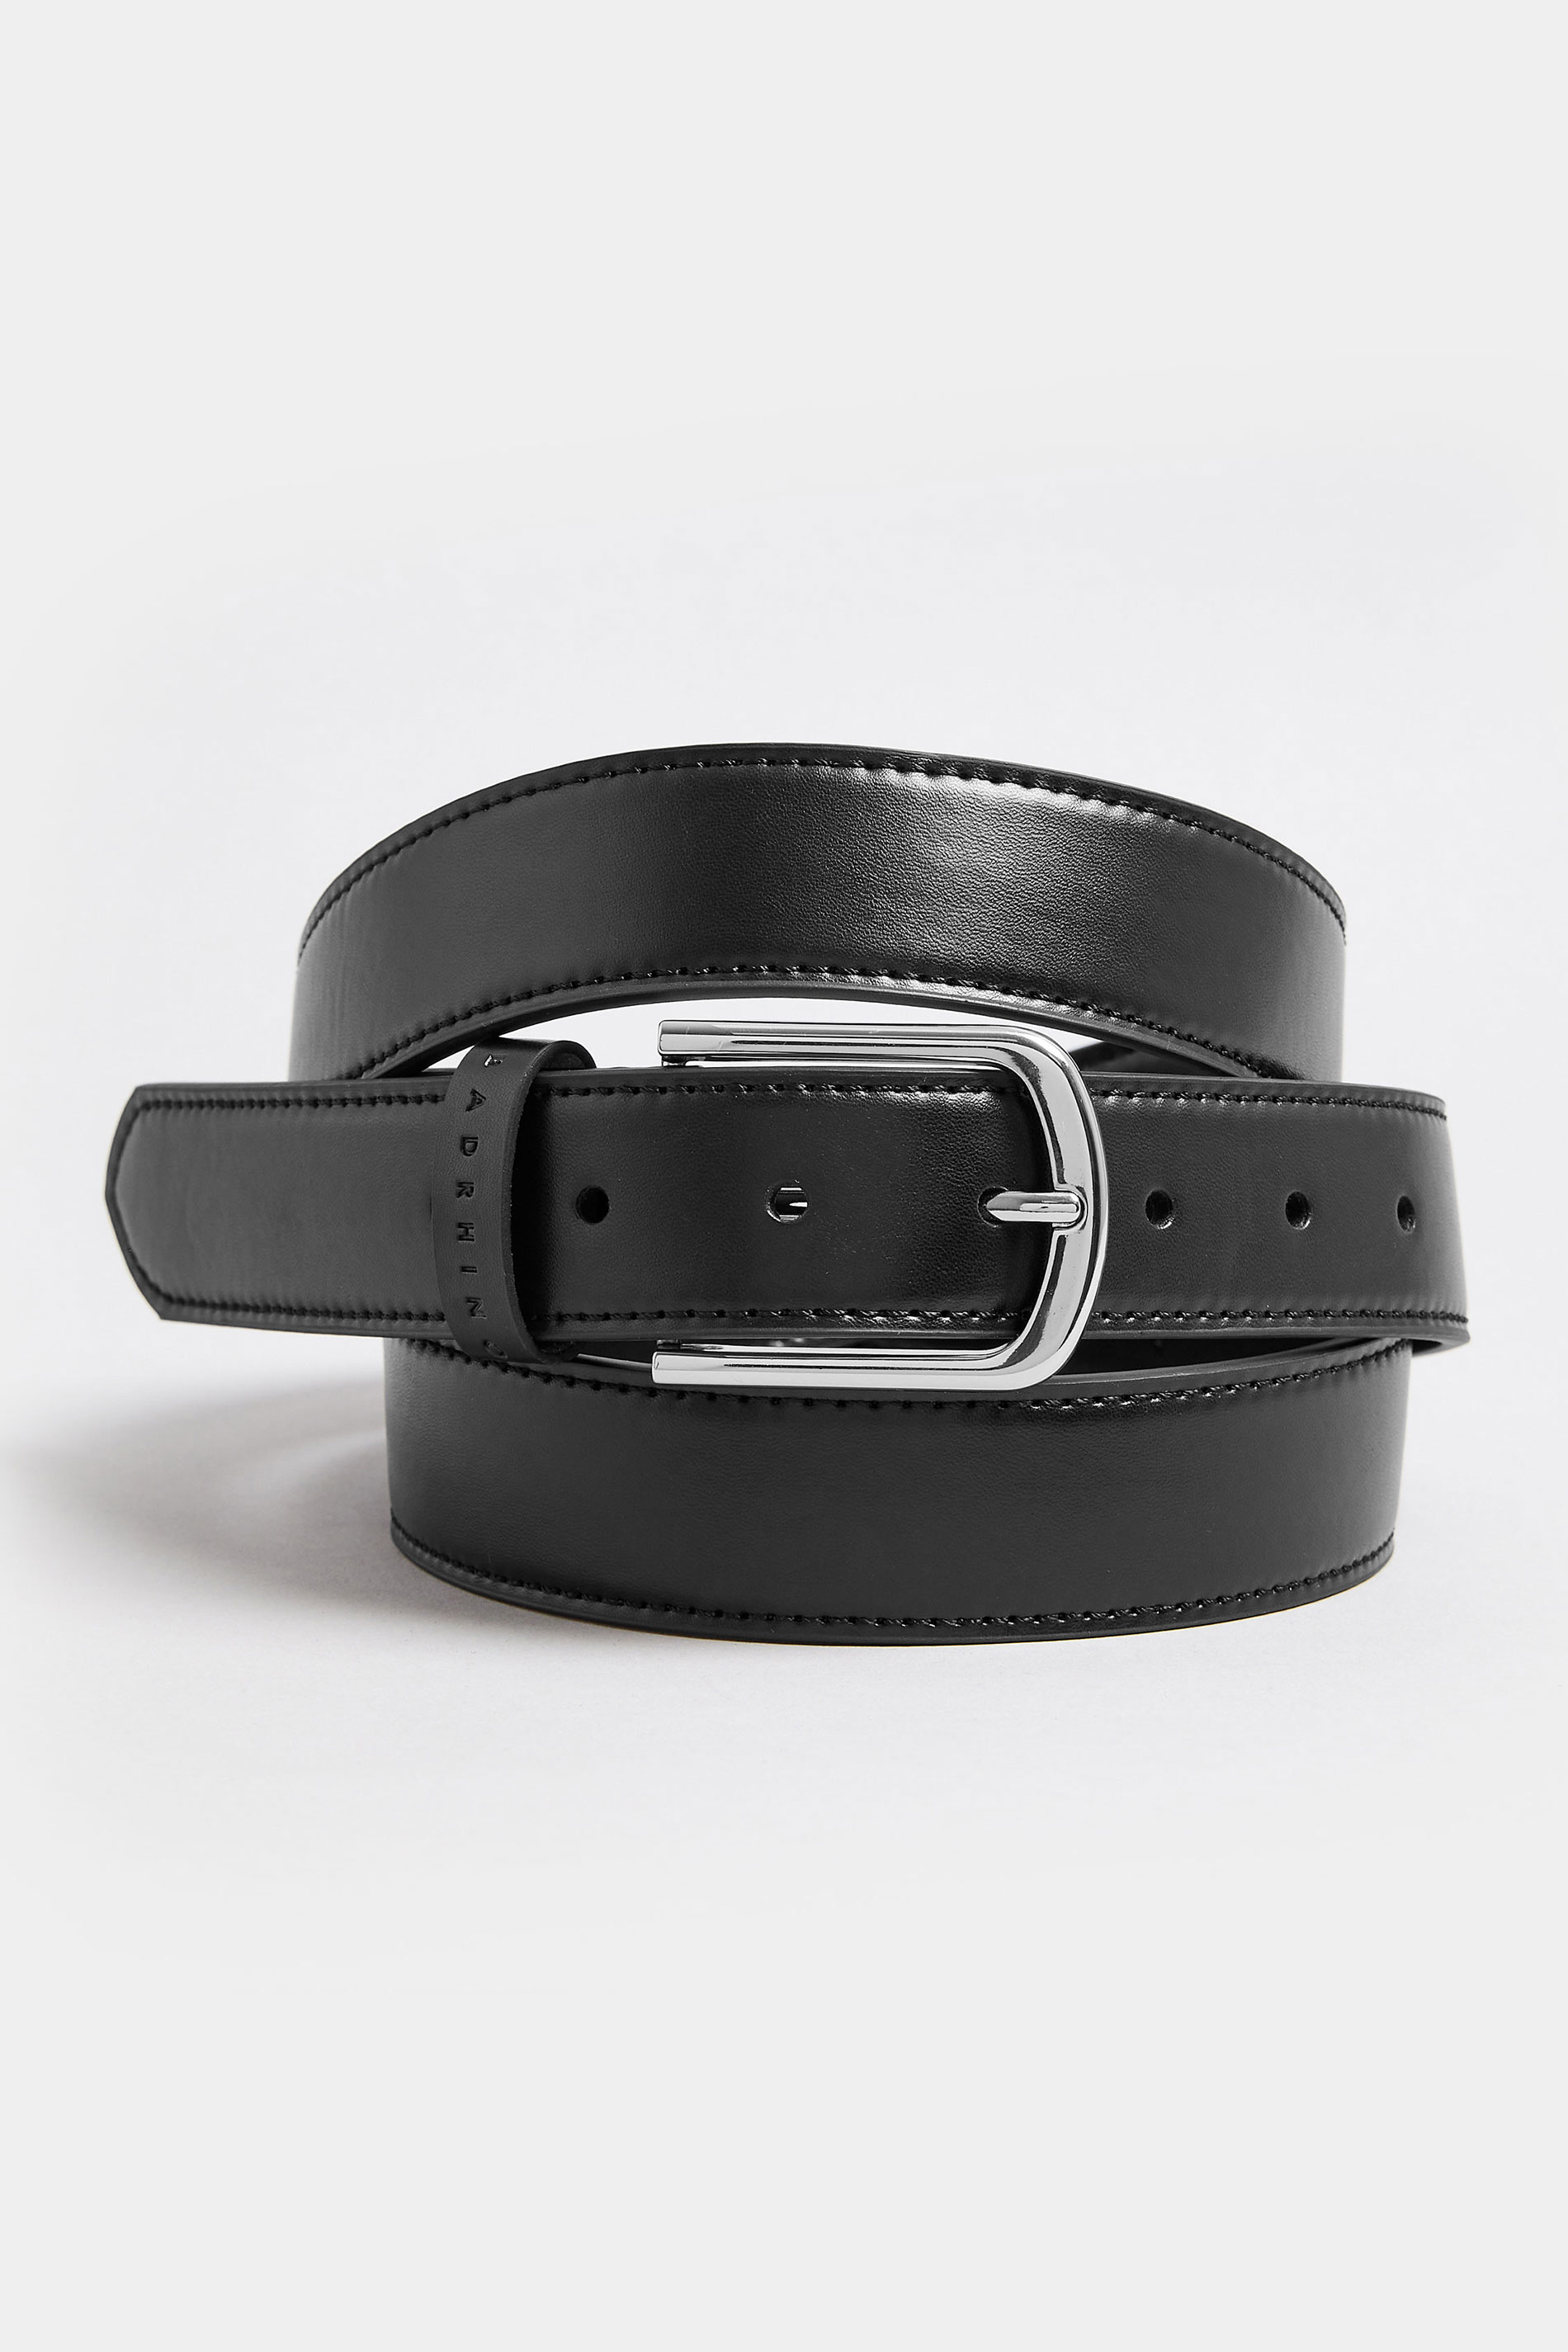 RHINO FLEX Black Flex Leather Look Buckle Belt | BadRhino 3